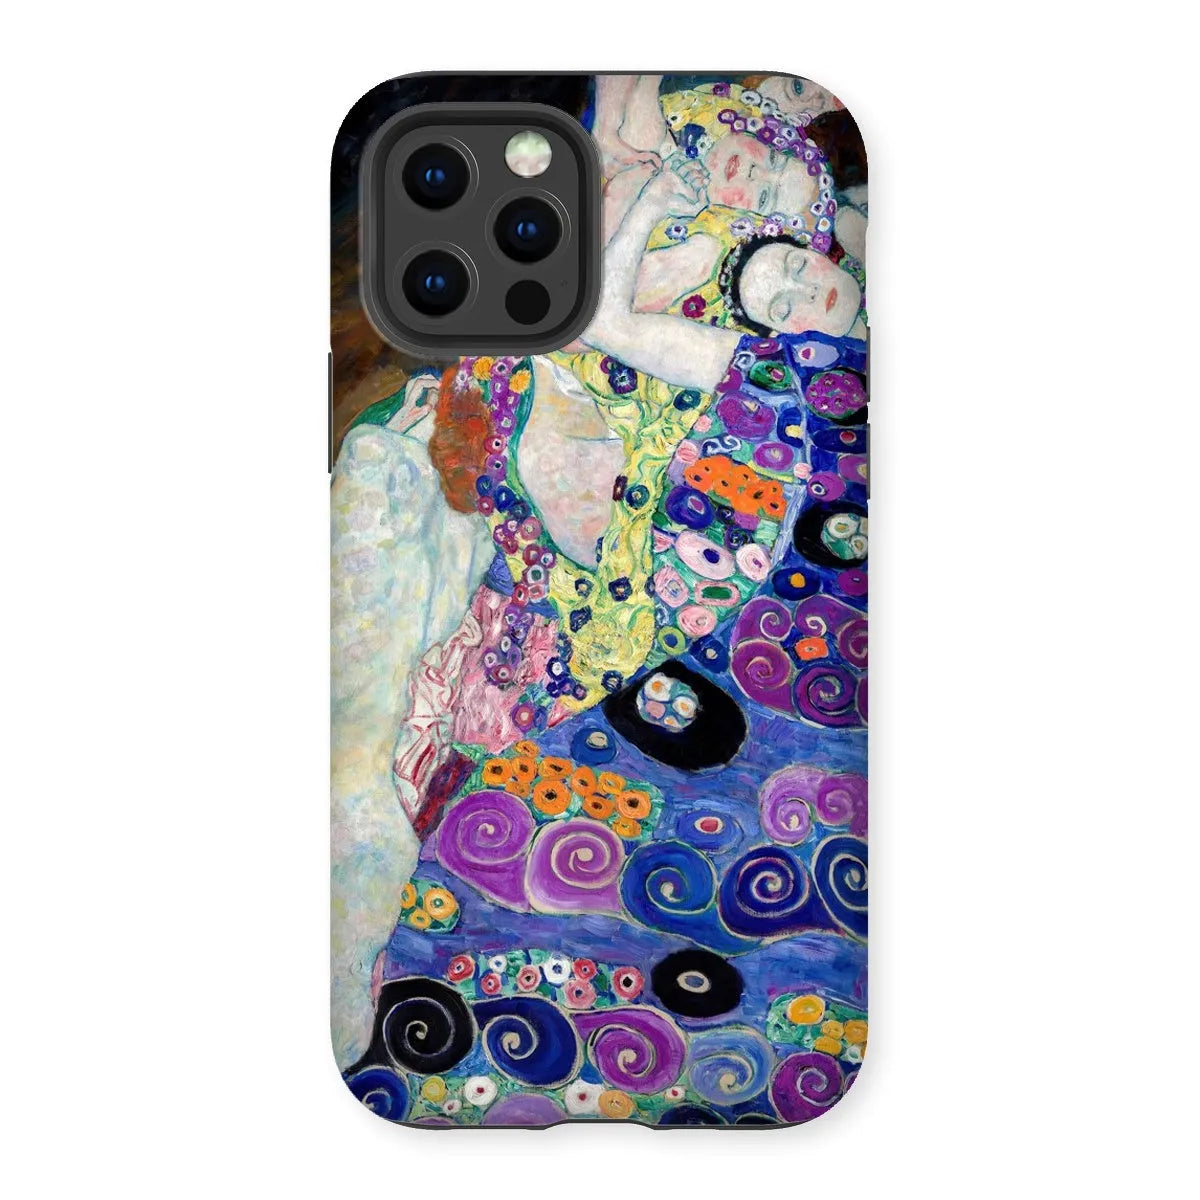 The Virgin - Vienna Secession Phone Case - Gustav Klimt - Iphone 12 Pro / Matte - Mobile Phone Cases - Aesthetic Art